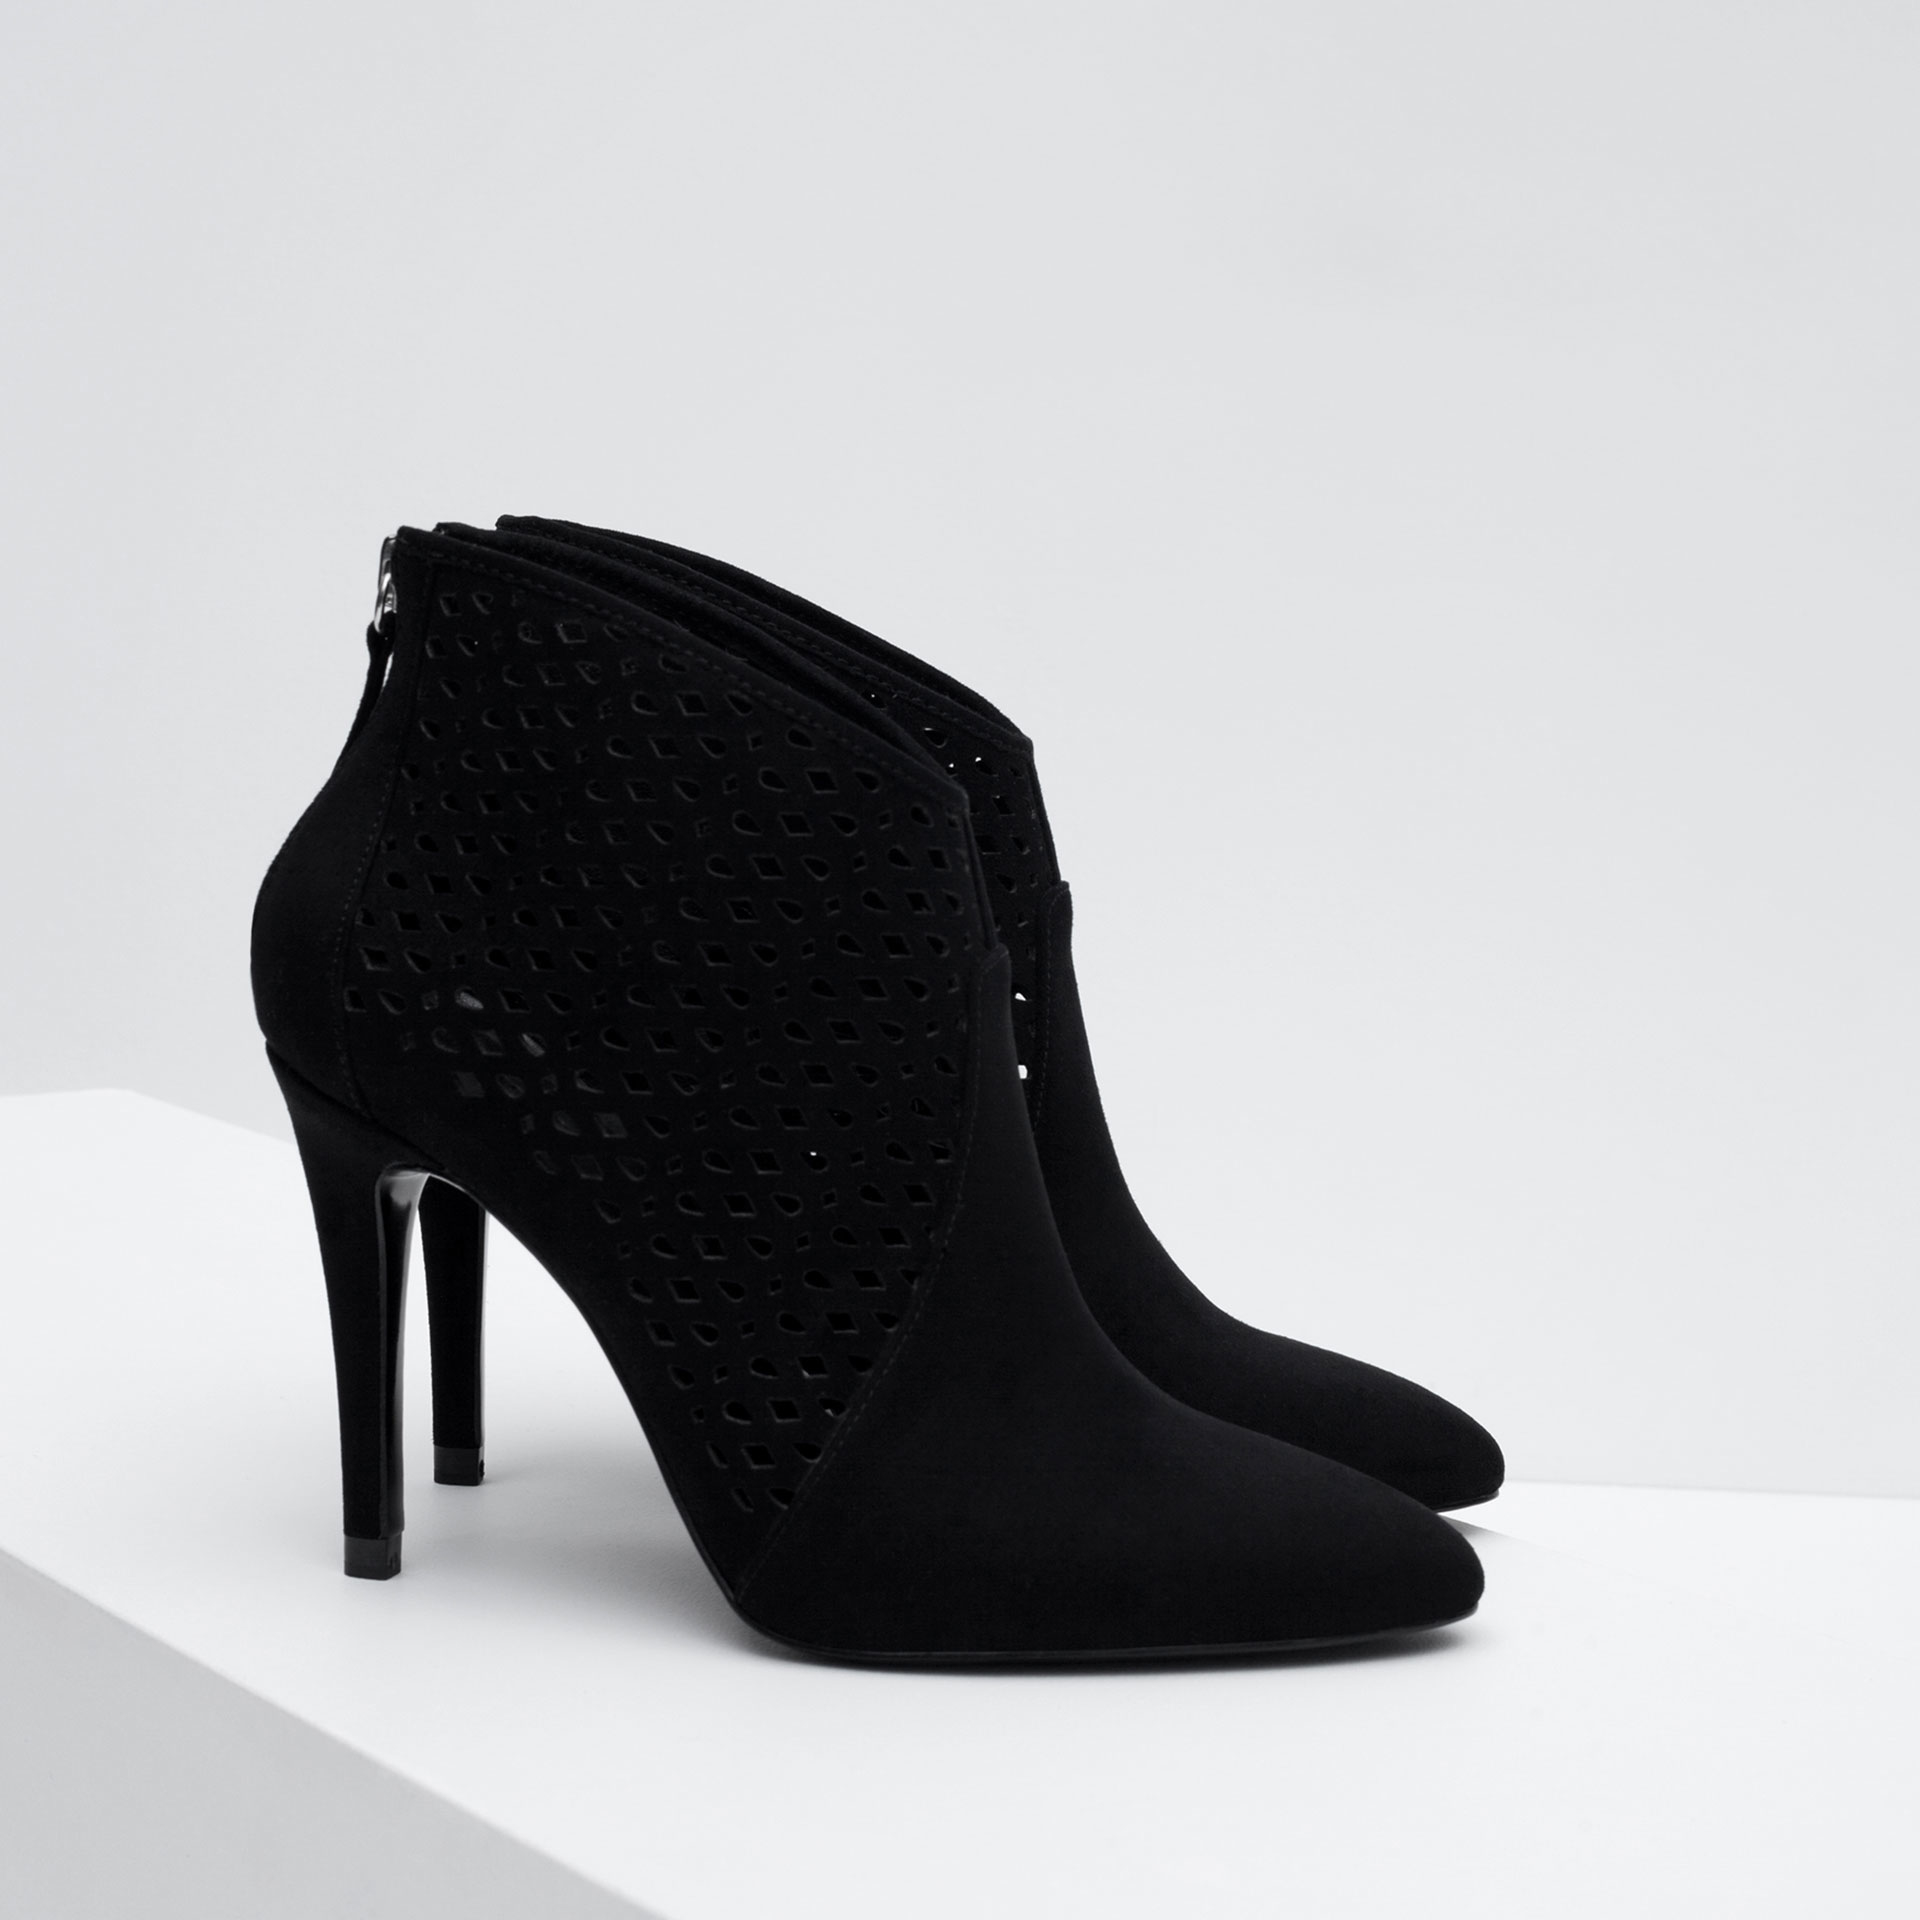 Zara Cut Work High Heel Ankle Boots in Black | Lyst